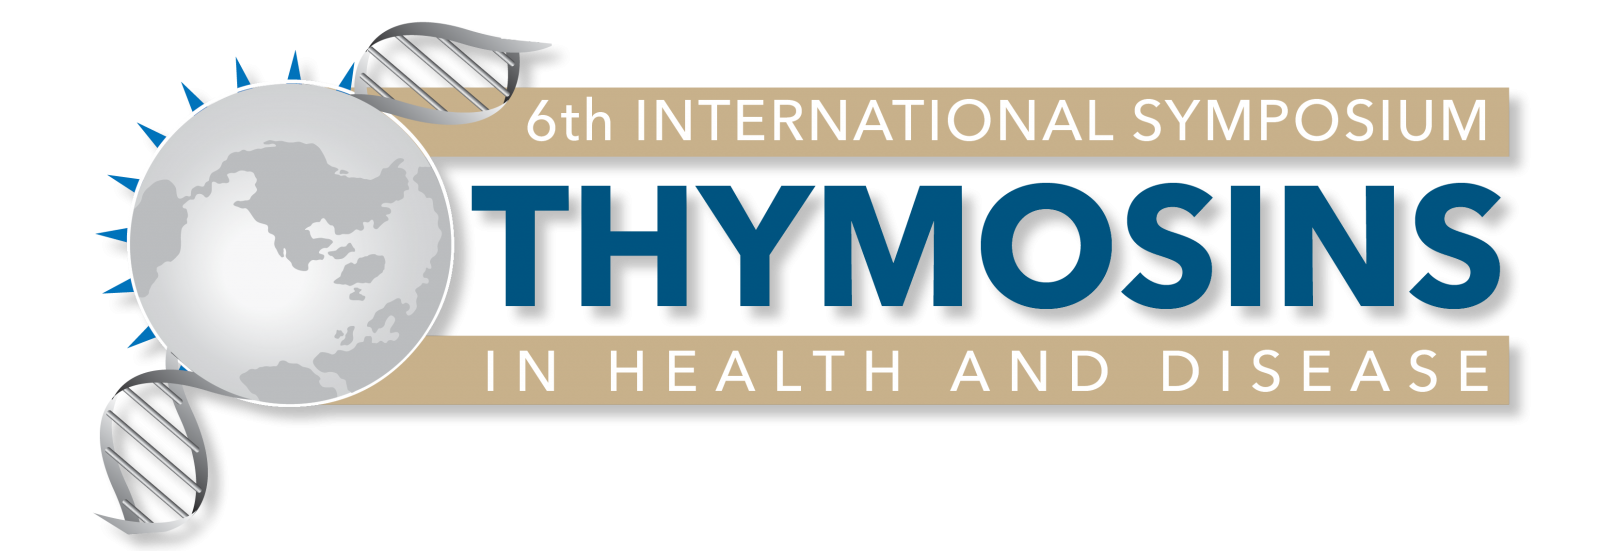 International Symposium Thymosins in Health and Disease Logo